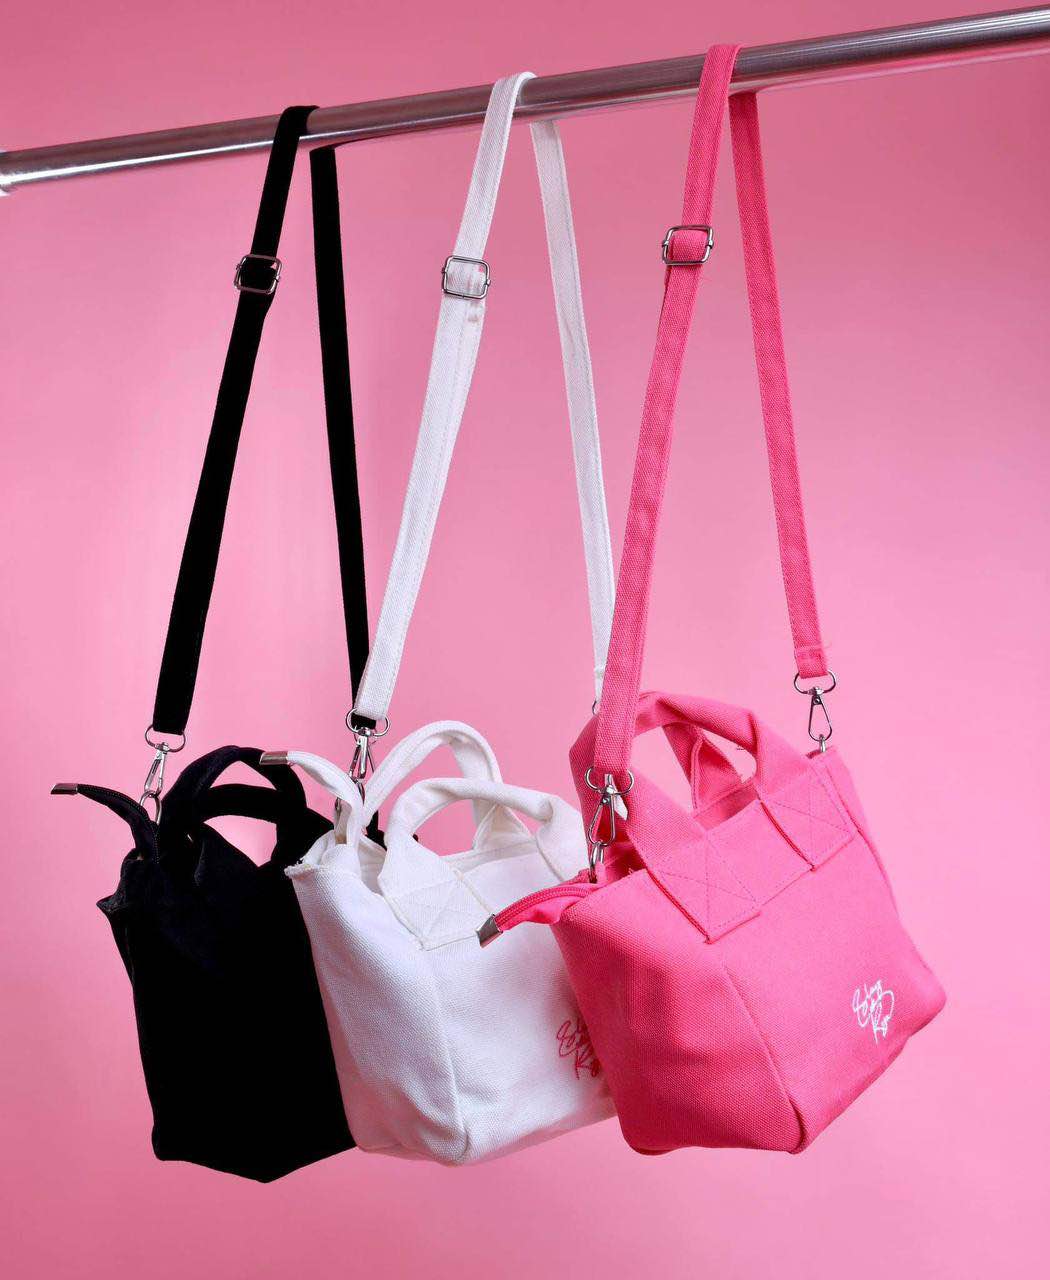 Ryx Merch Pink Tote Bag